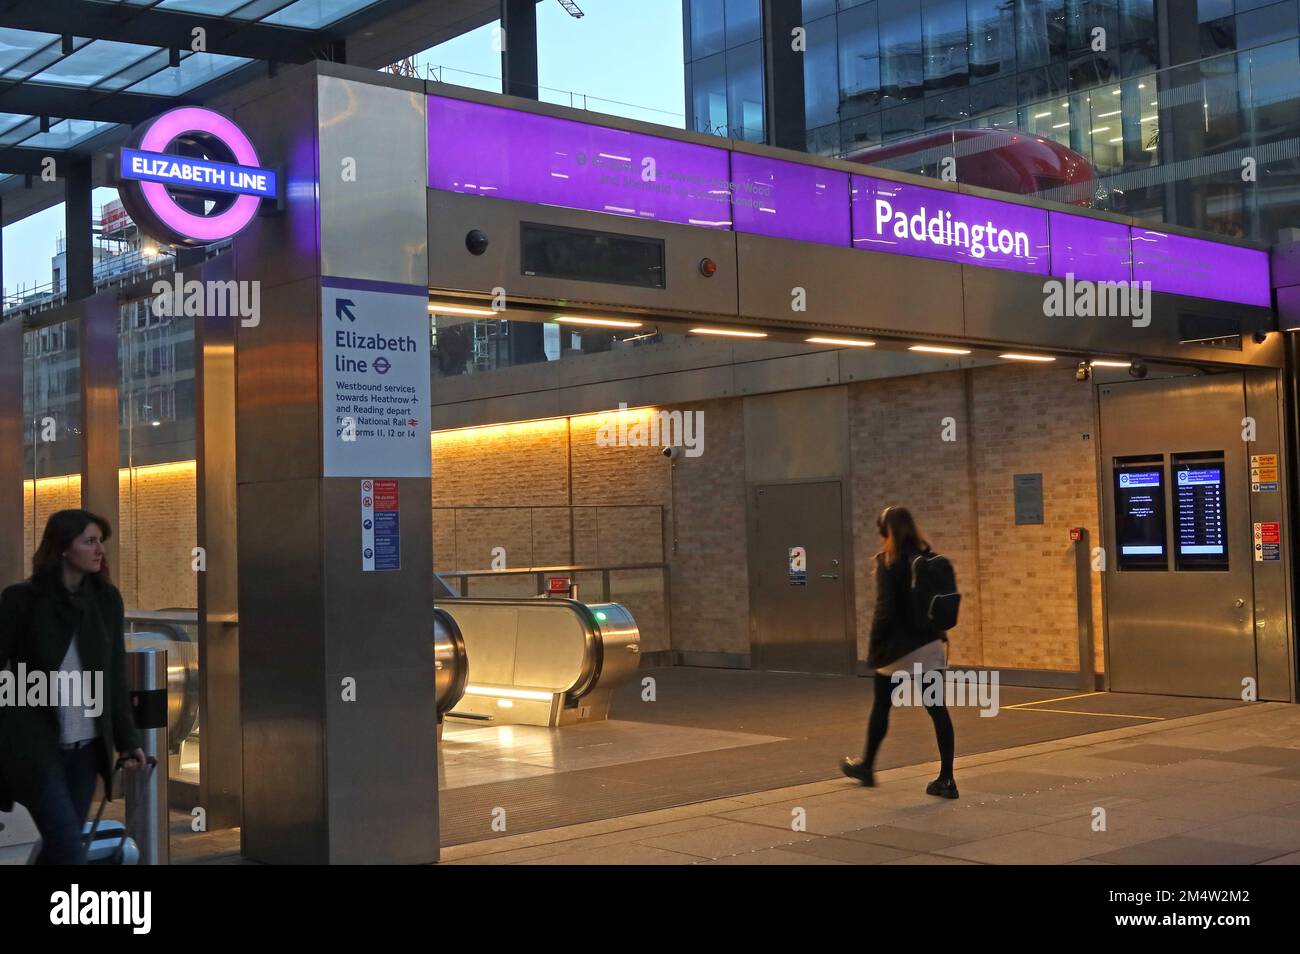 New Elizabeth Line Crossrail Eingang zum Bahnhof London Paddington, violettes London Transport Elizabeth Line Roundel Schild Stockfoto